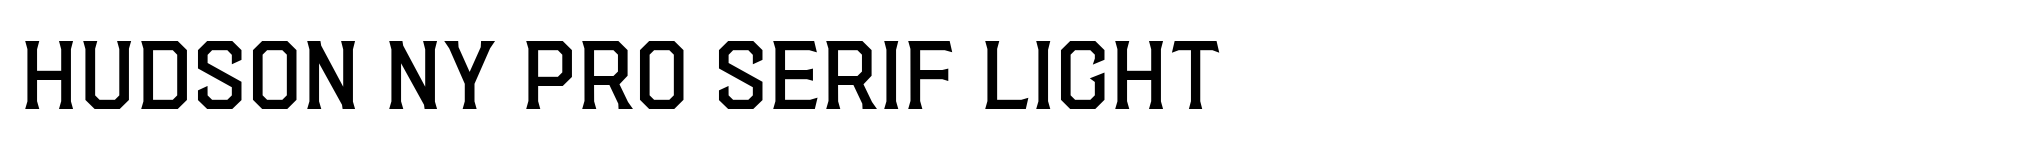 Hudson NY Pro Serif Light image